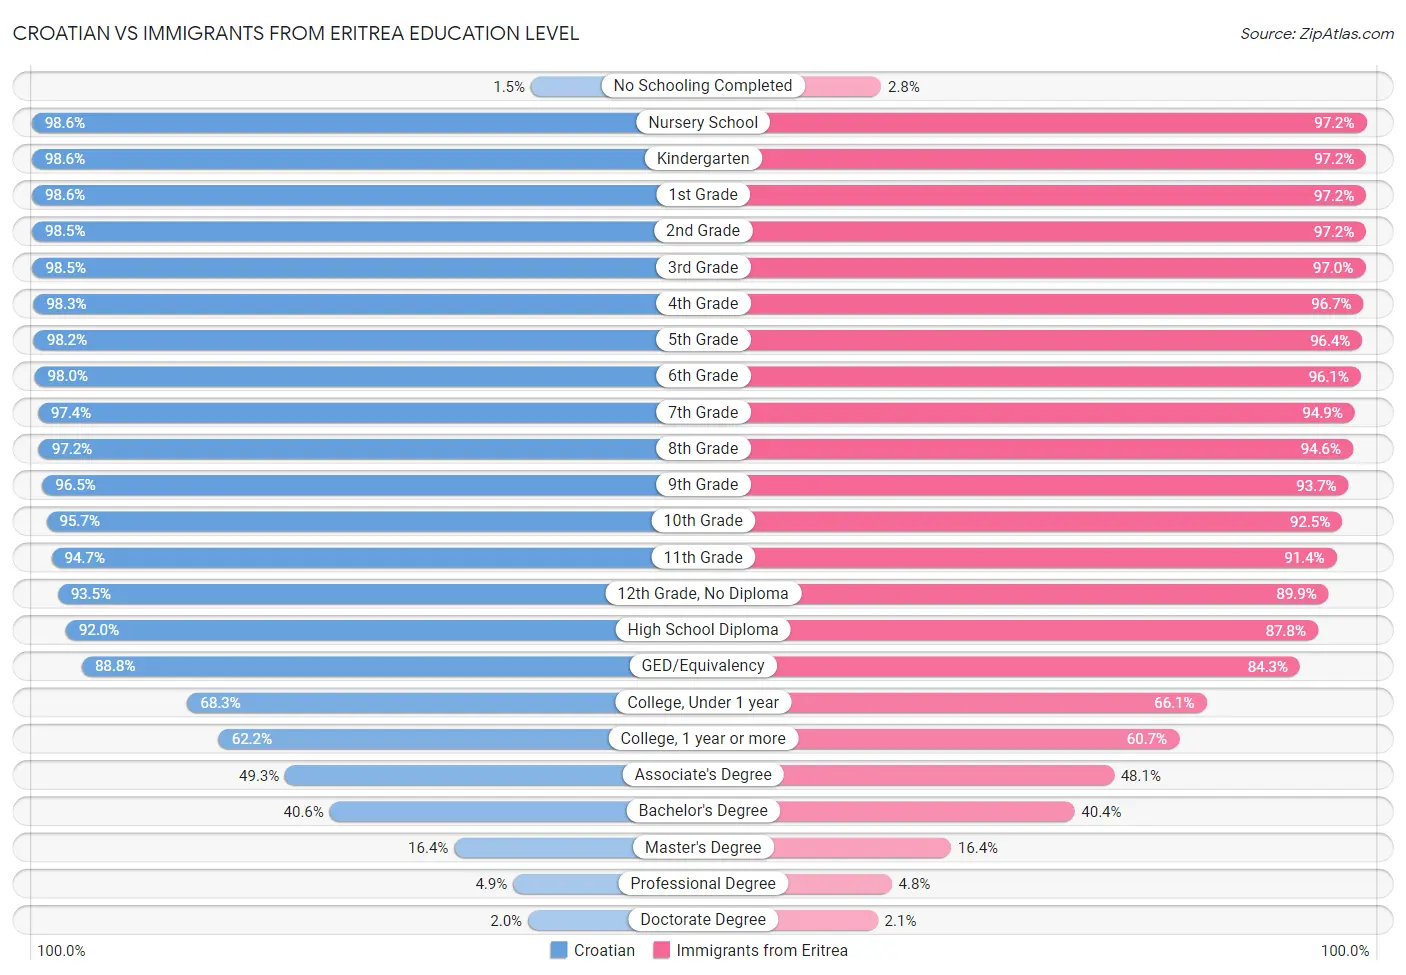 Croatian vs Immigrants from Eritrea Education Level